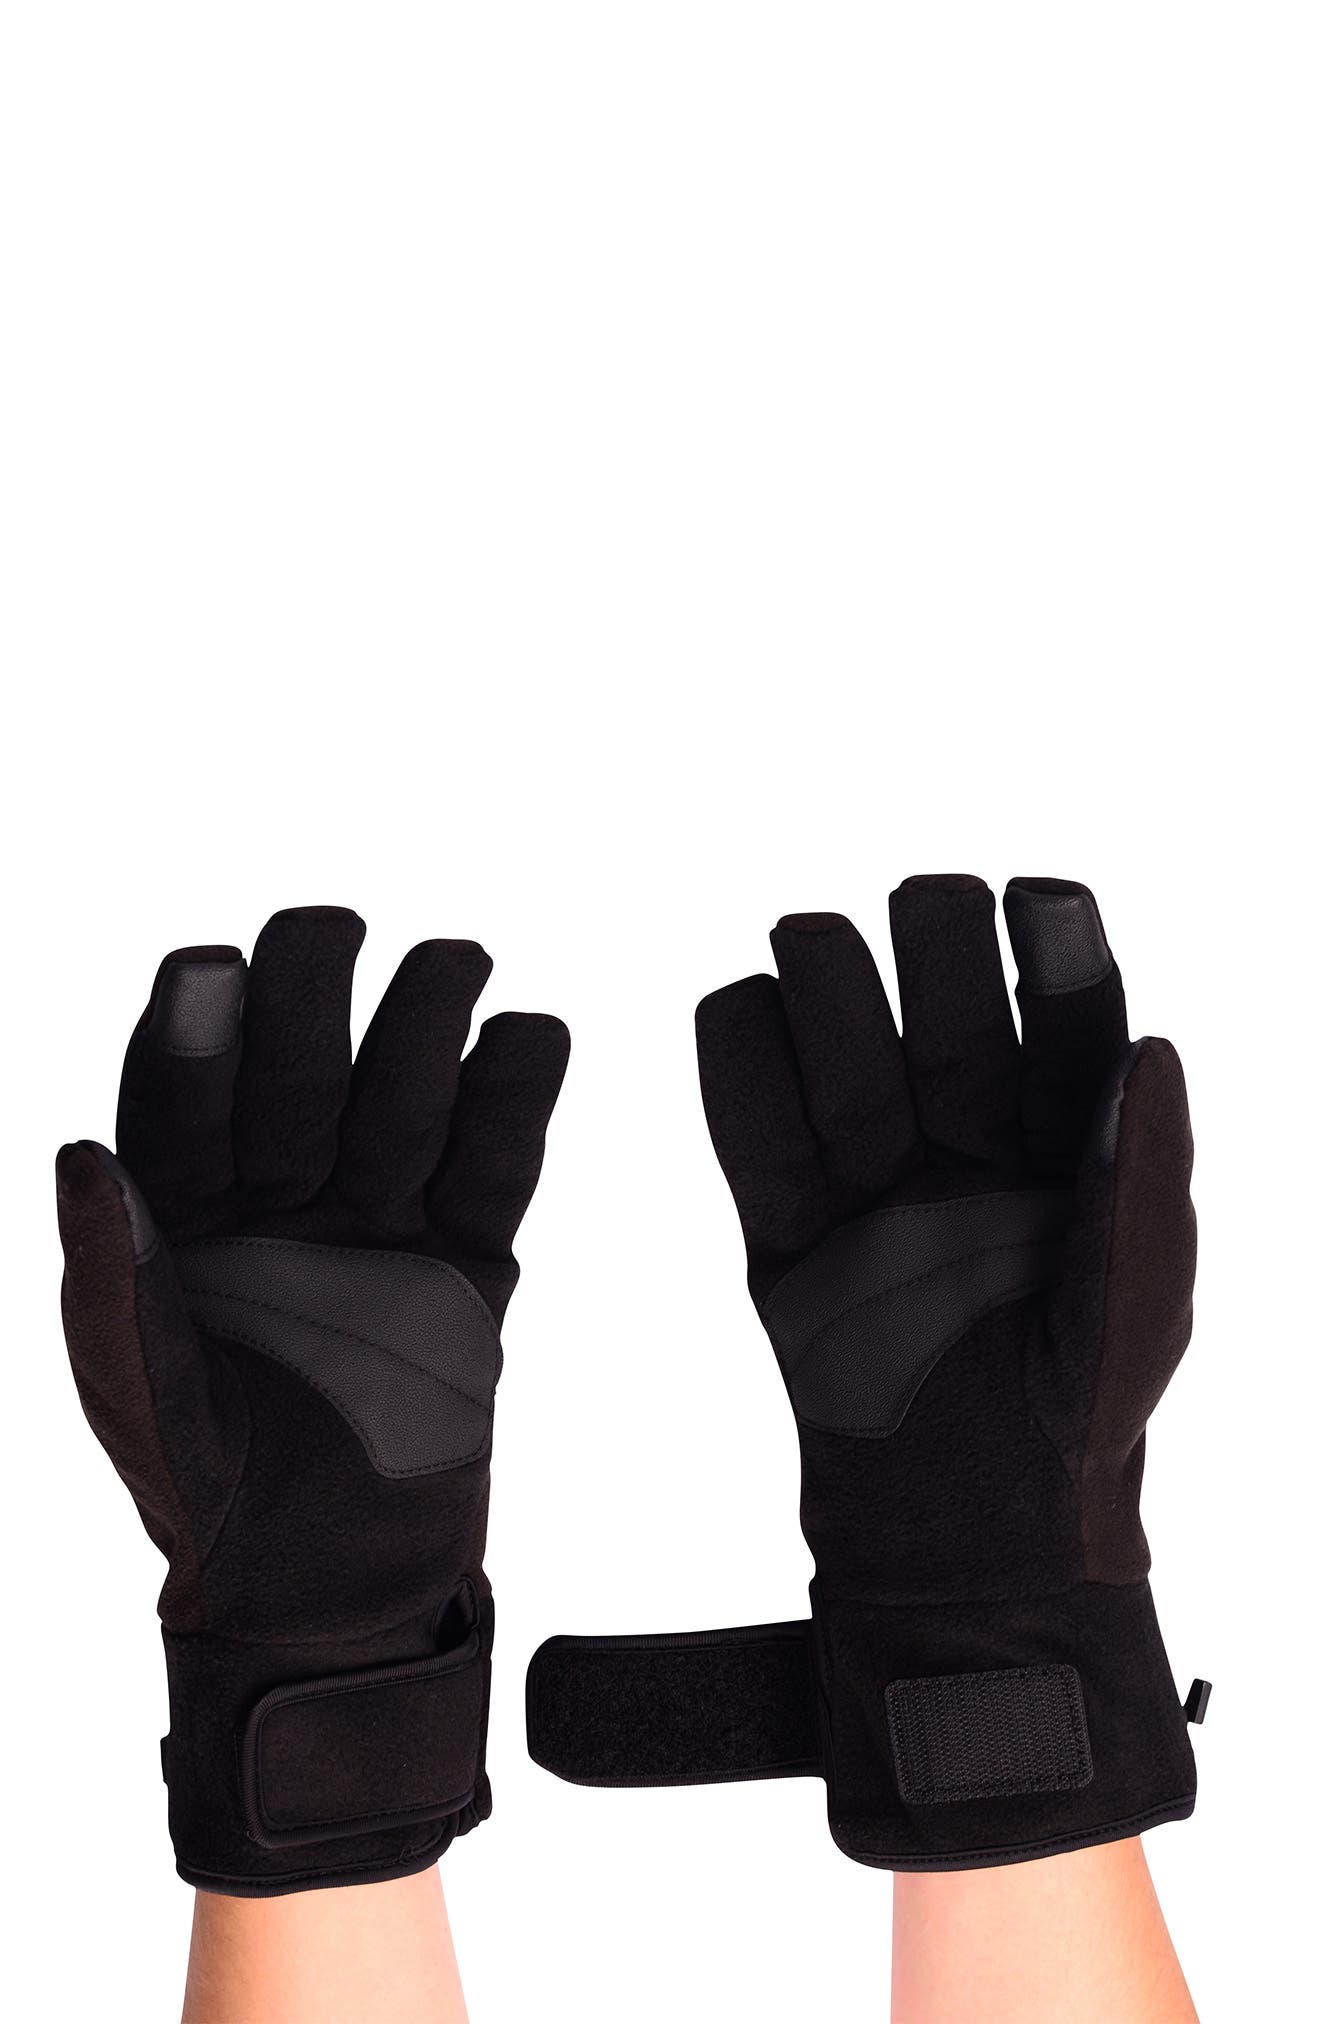 Red Bear Heated Glove 